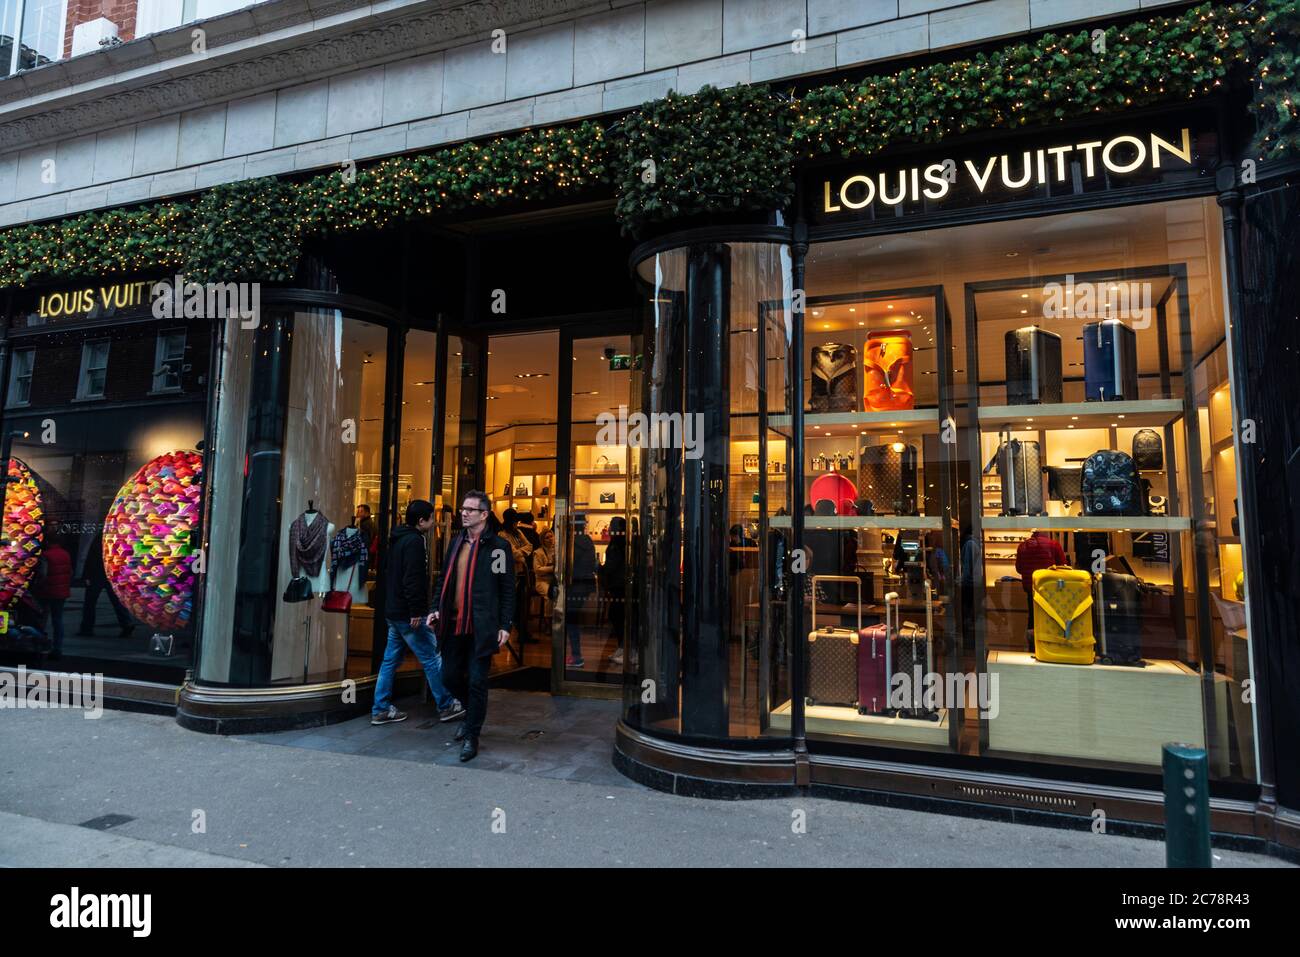 Dublin, Ireland - December 30, 2019: Facade of a Louis Vuitton clothing store with people around the center of Dublin, Ireland Stock Photo - Alamy